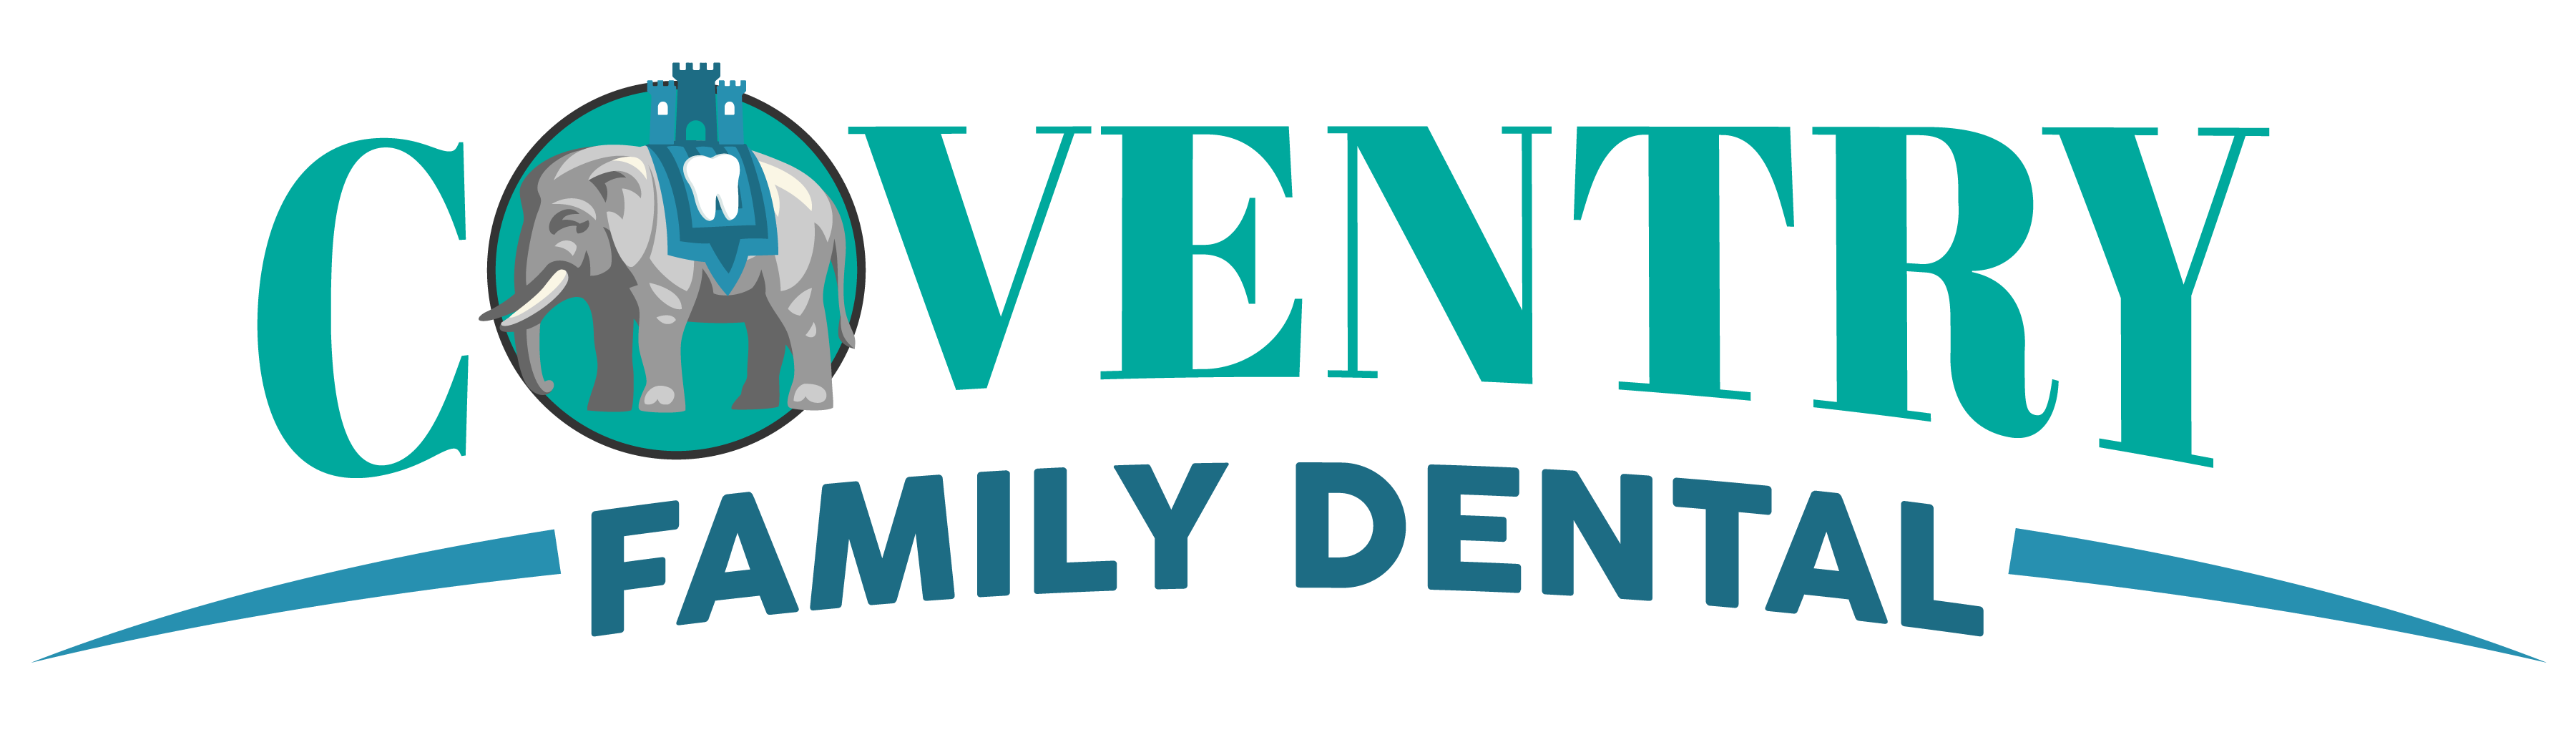 Coventry Family Dental